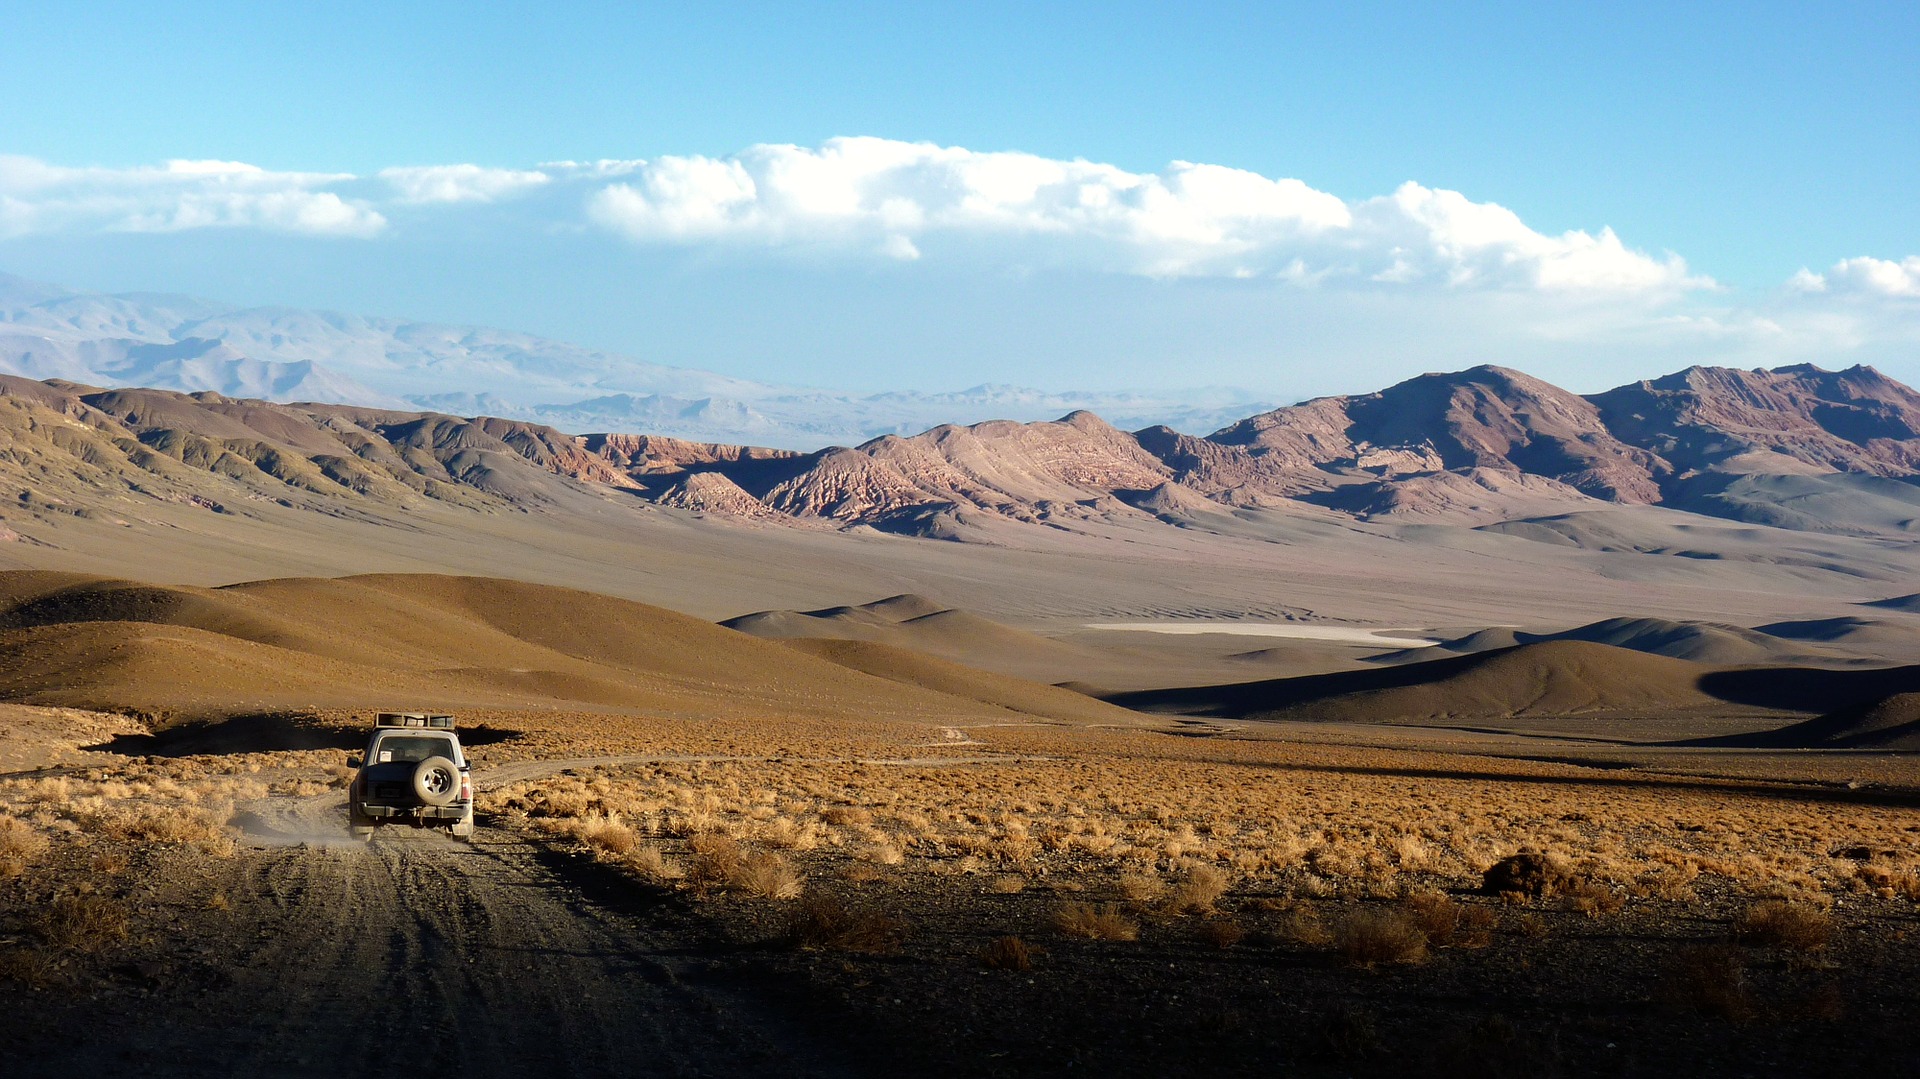 Jeep driving in dry desert-like landscape